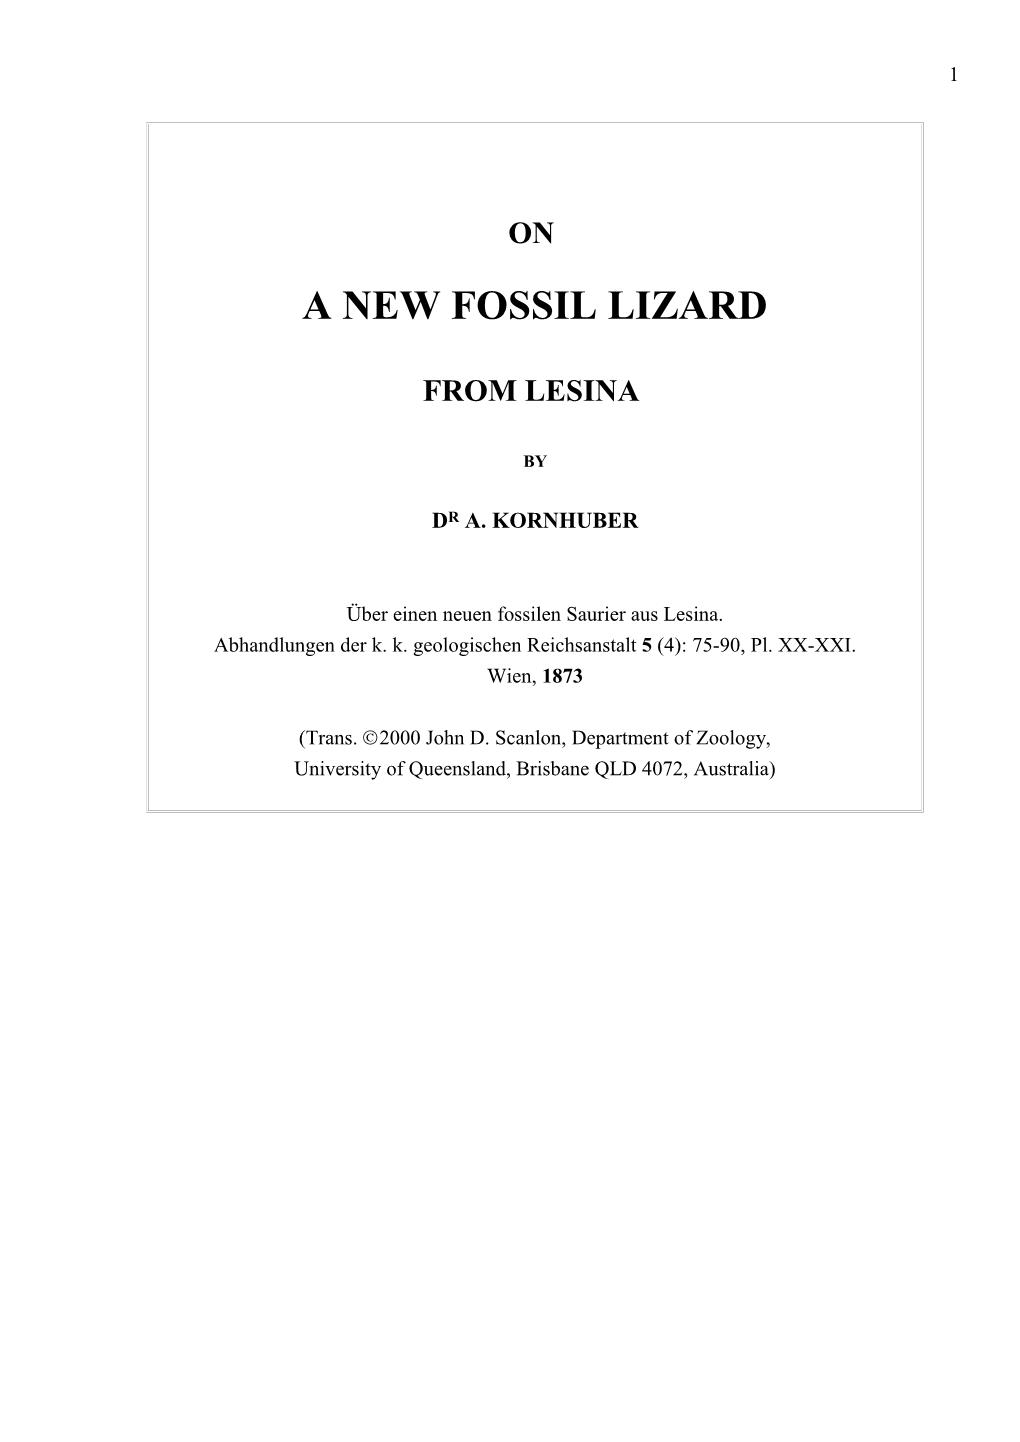 A New Fossil Lizard